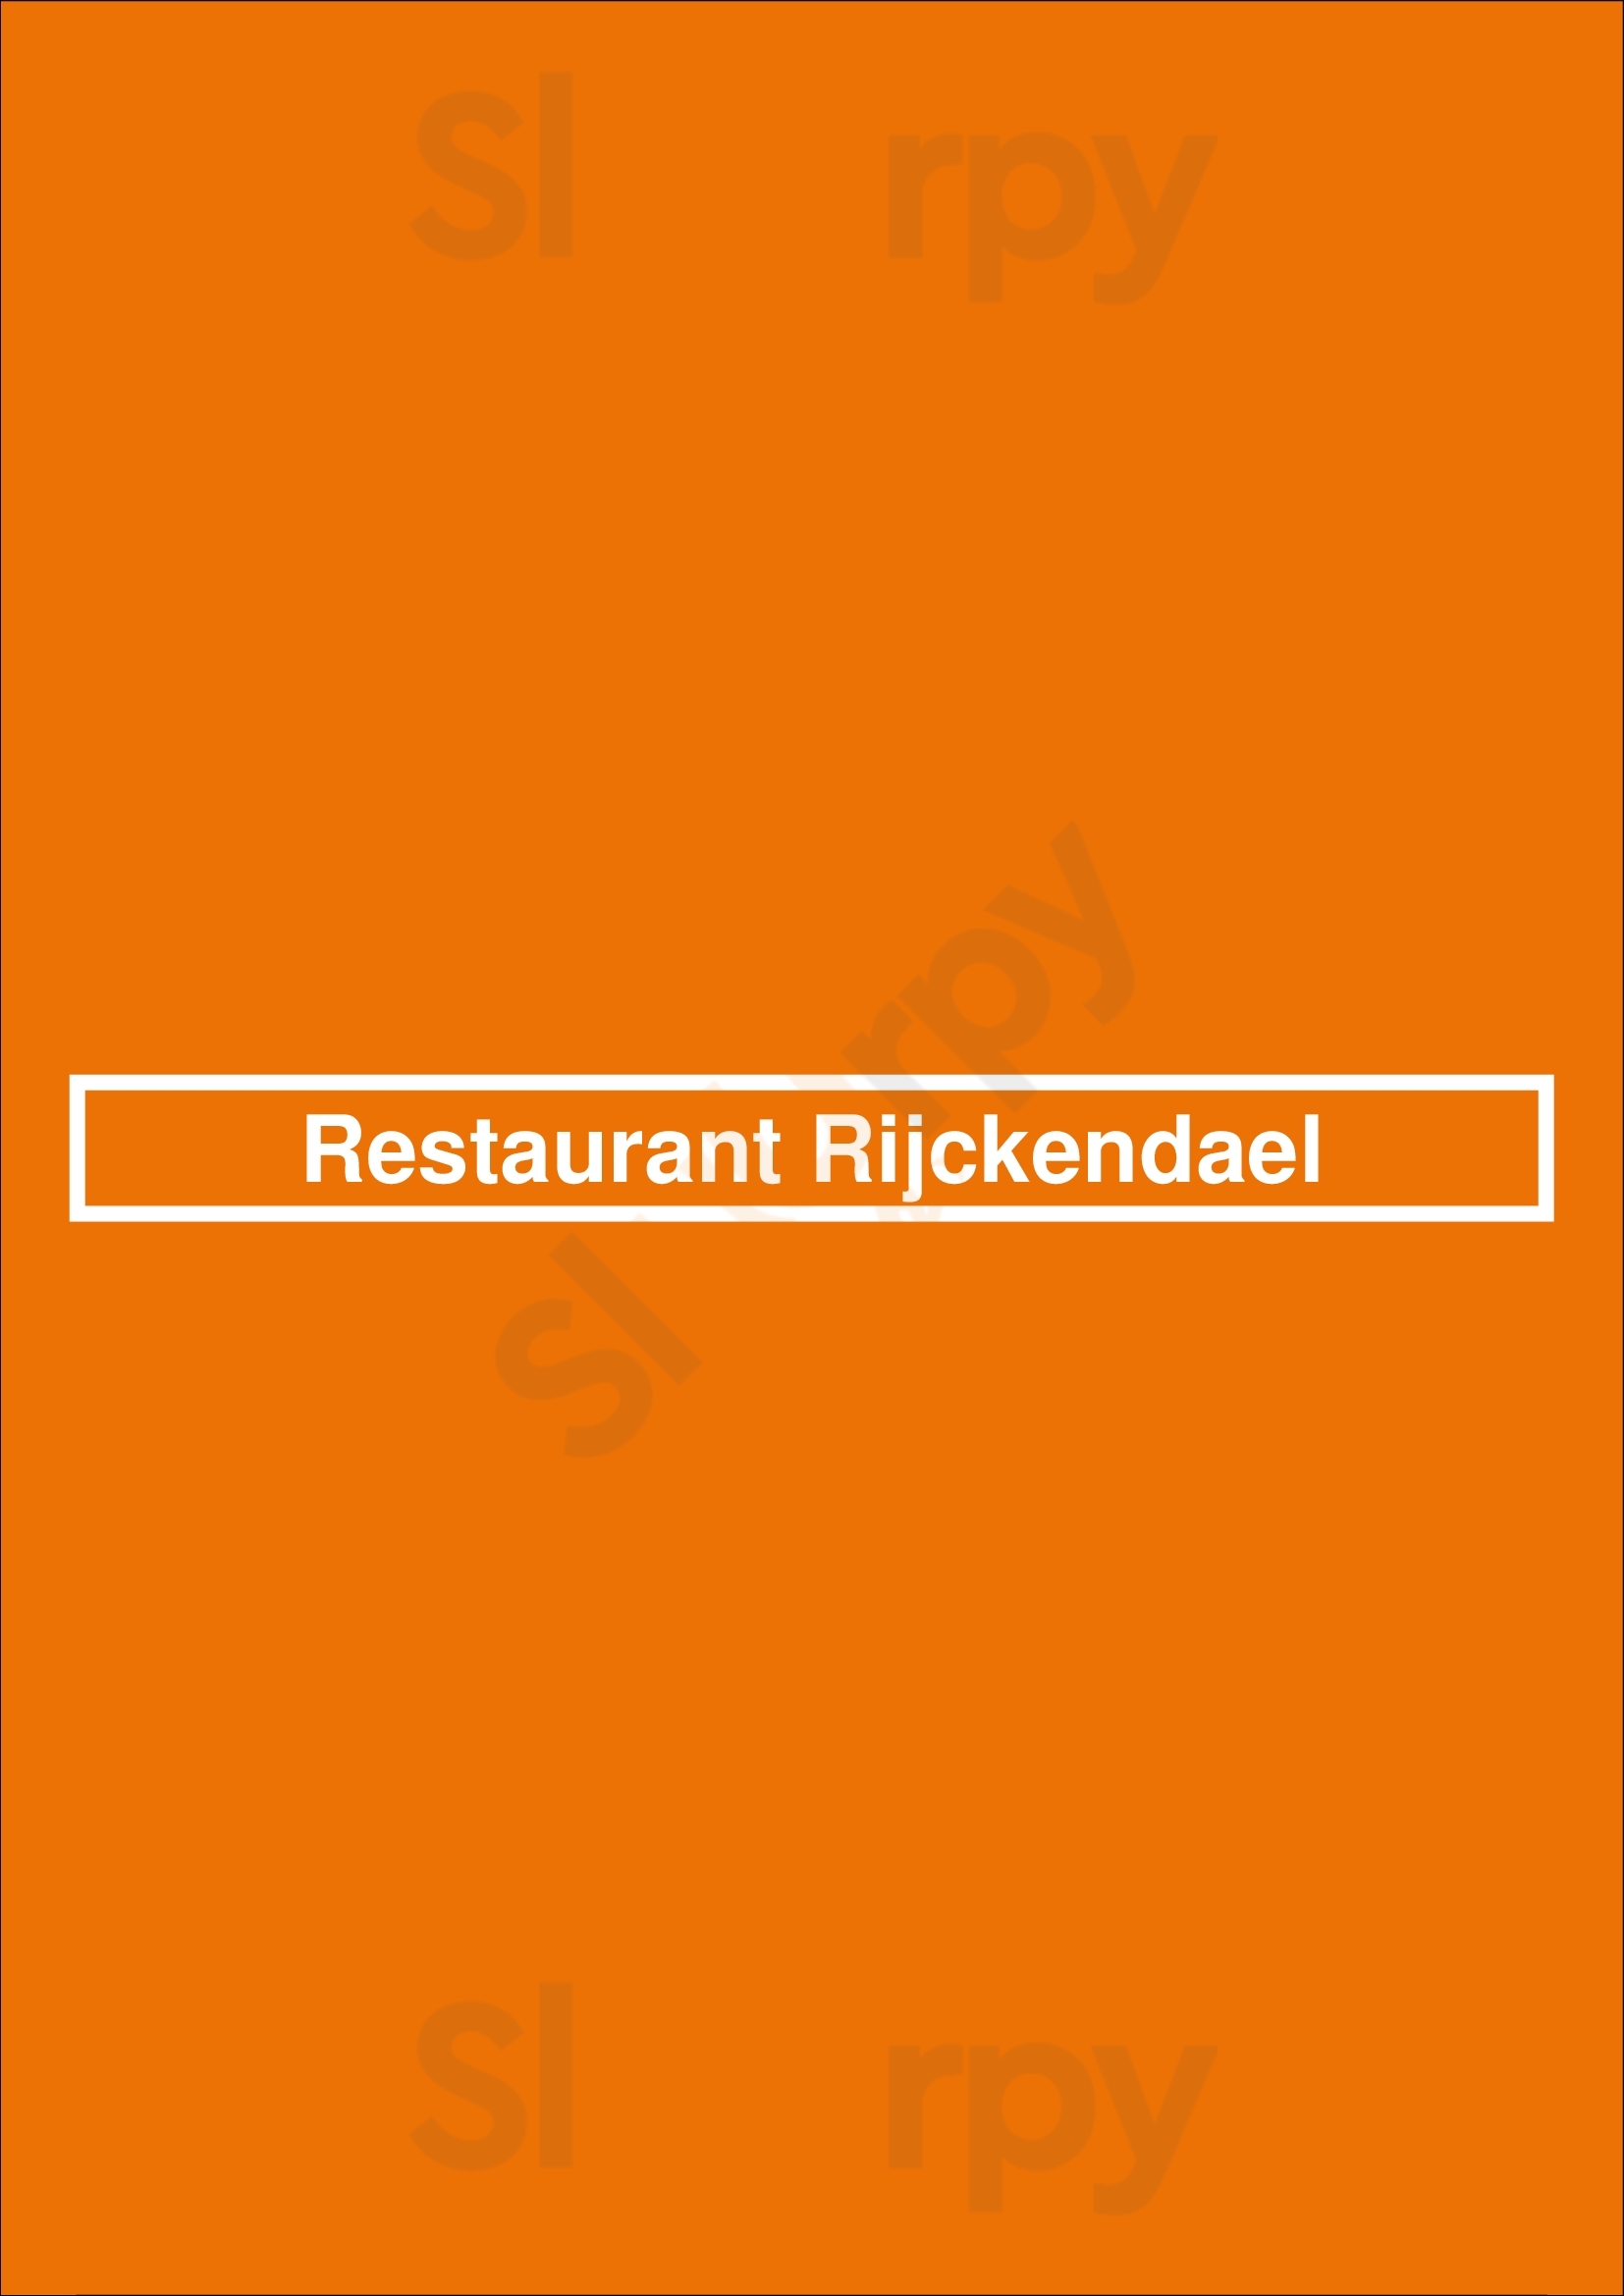 Restaurant Rijckendael Strombeek-Bever Menu - 1